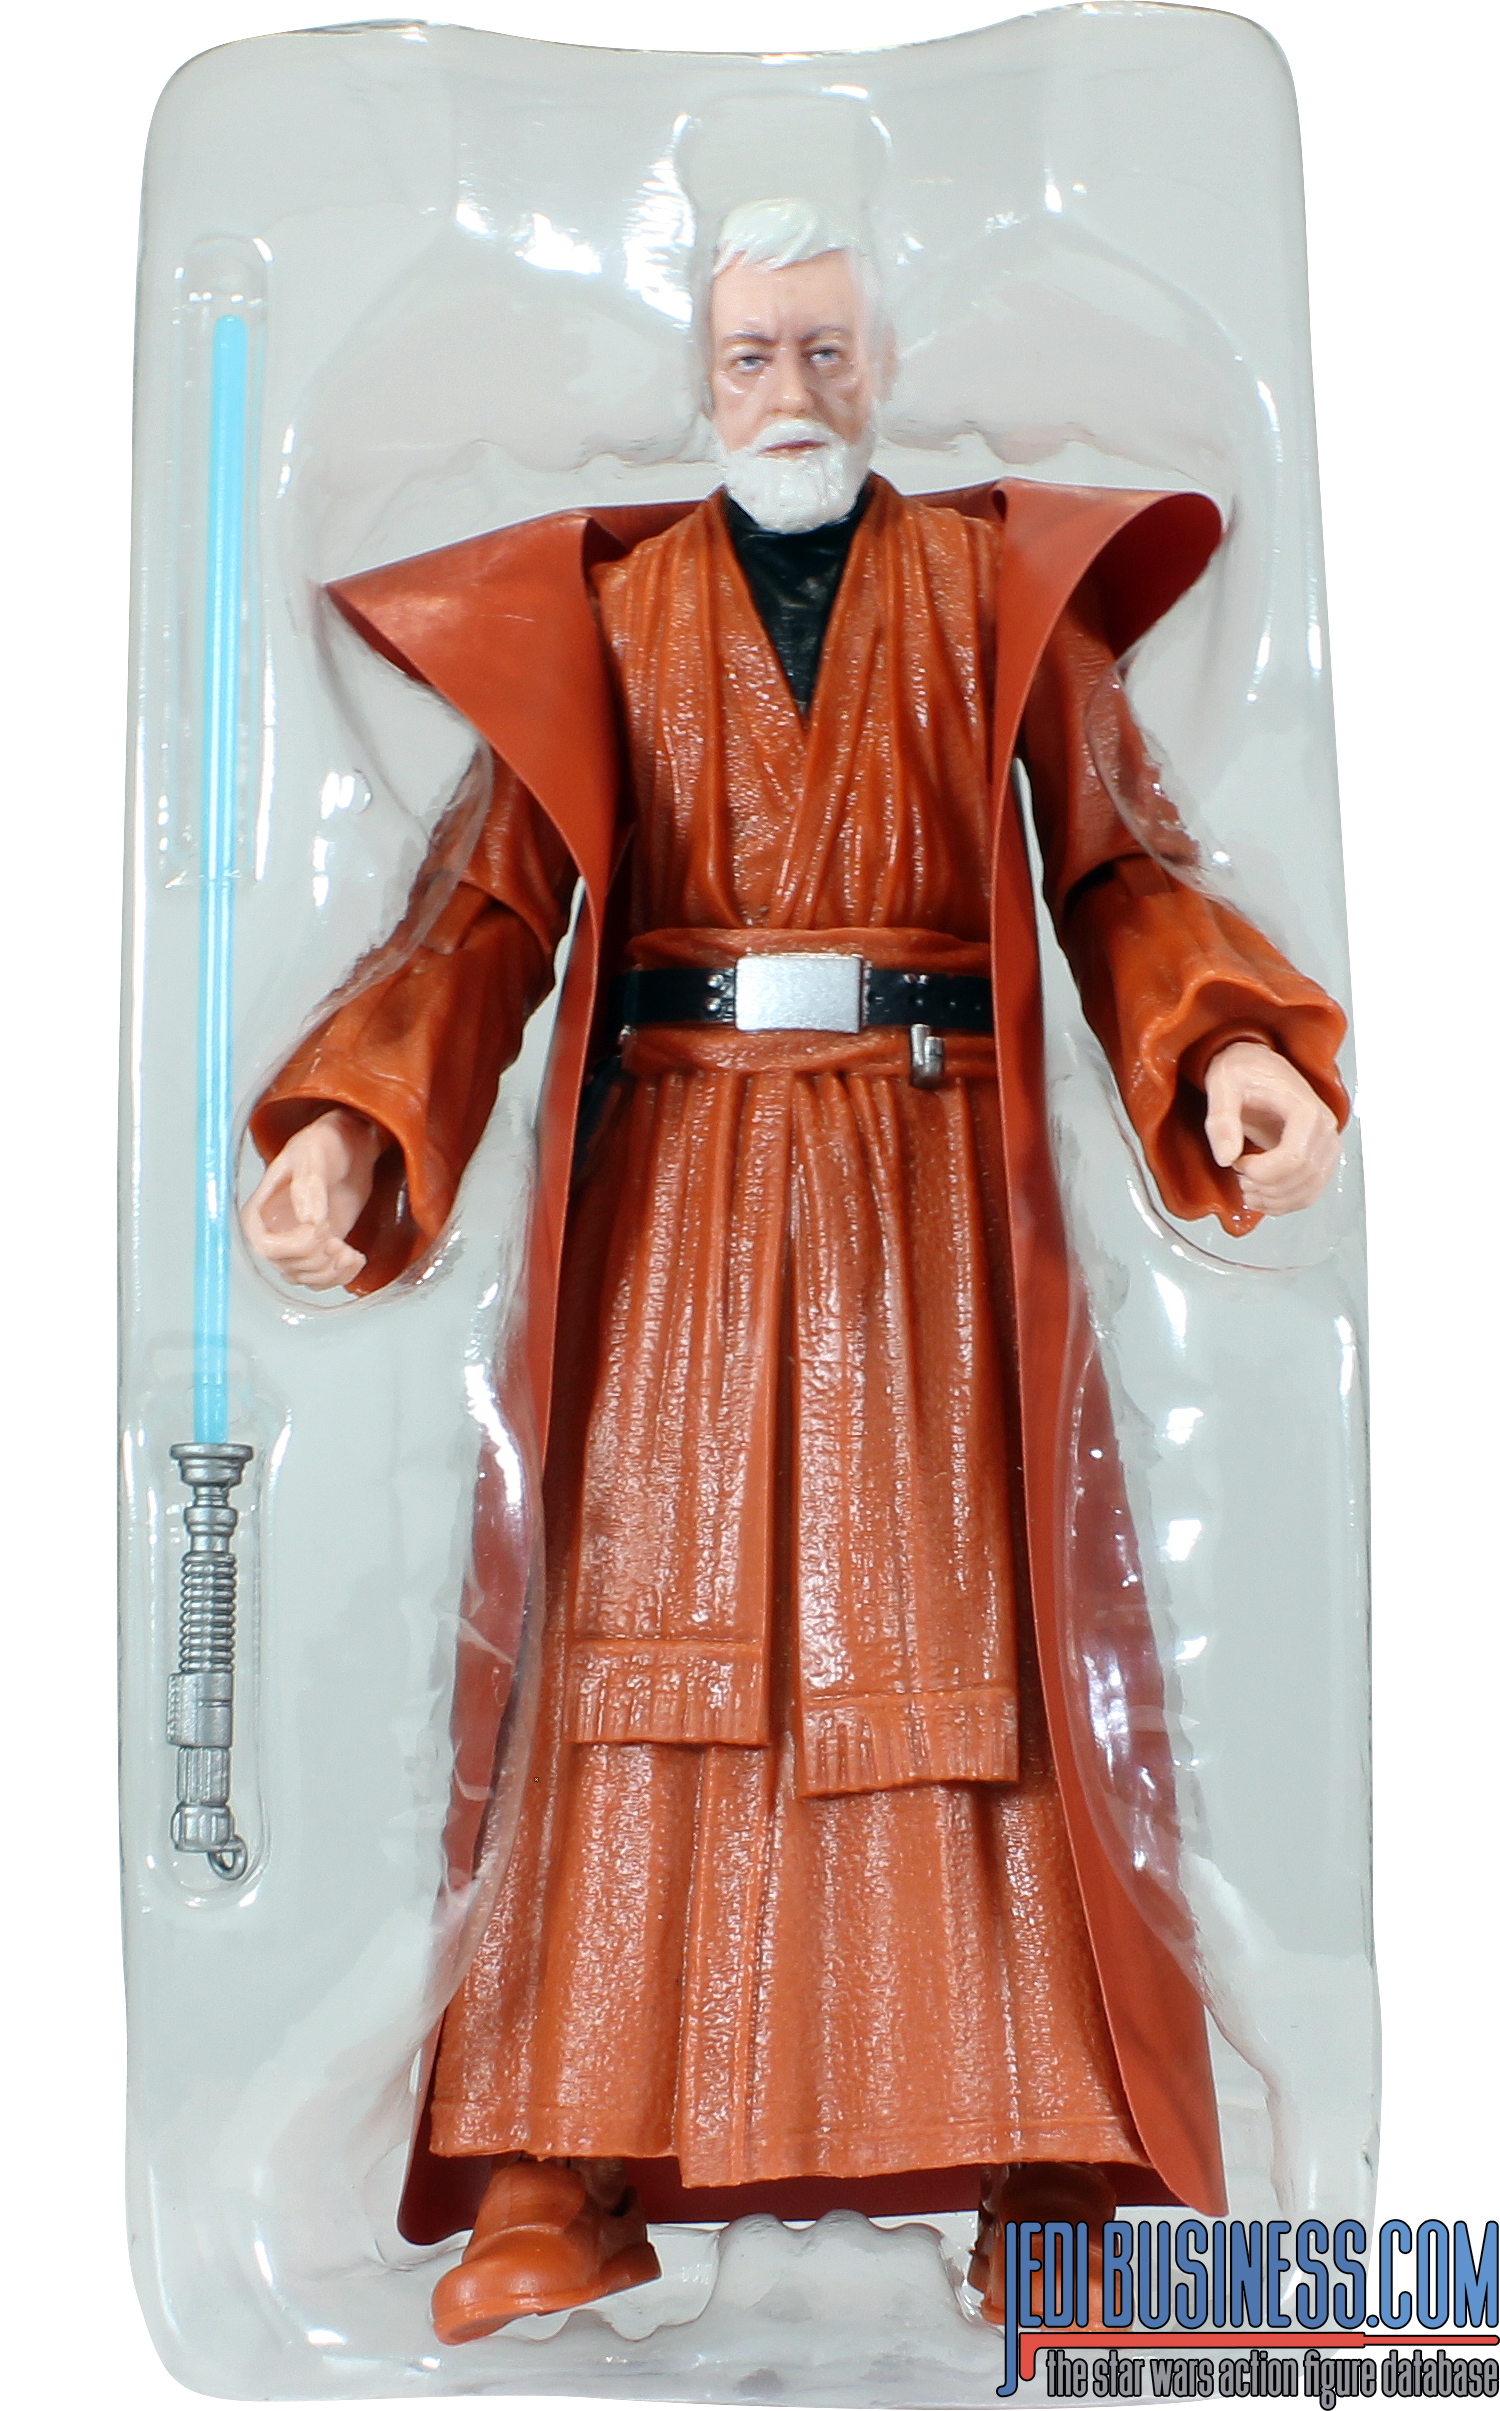 Obi-Wan Kenobi A New Hope